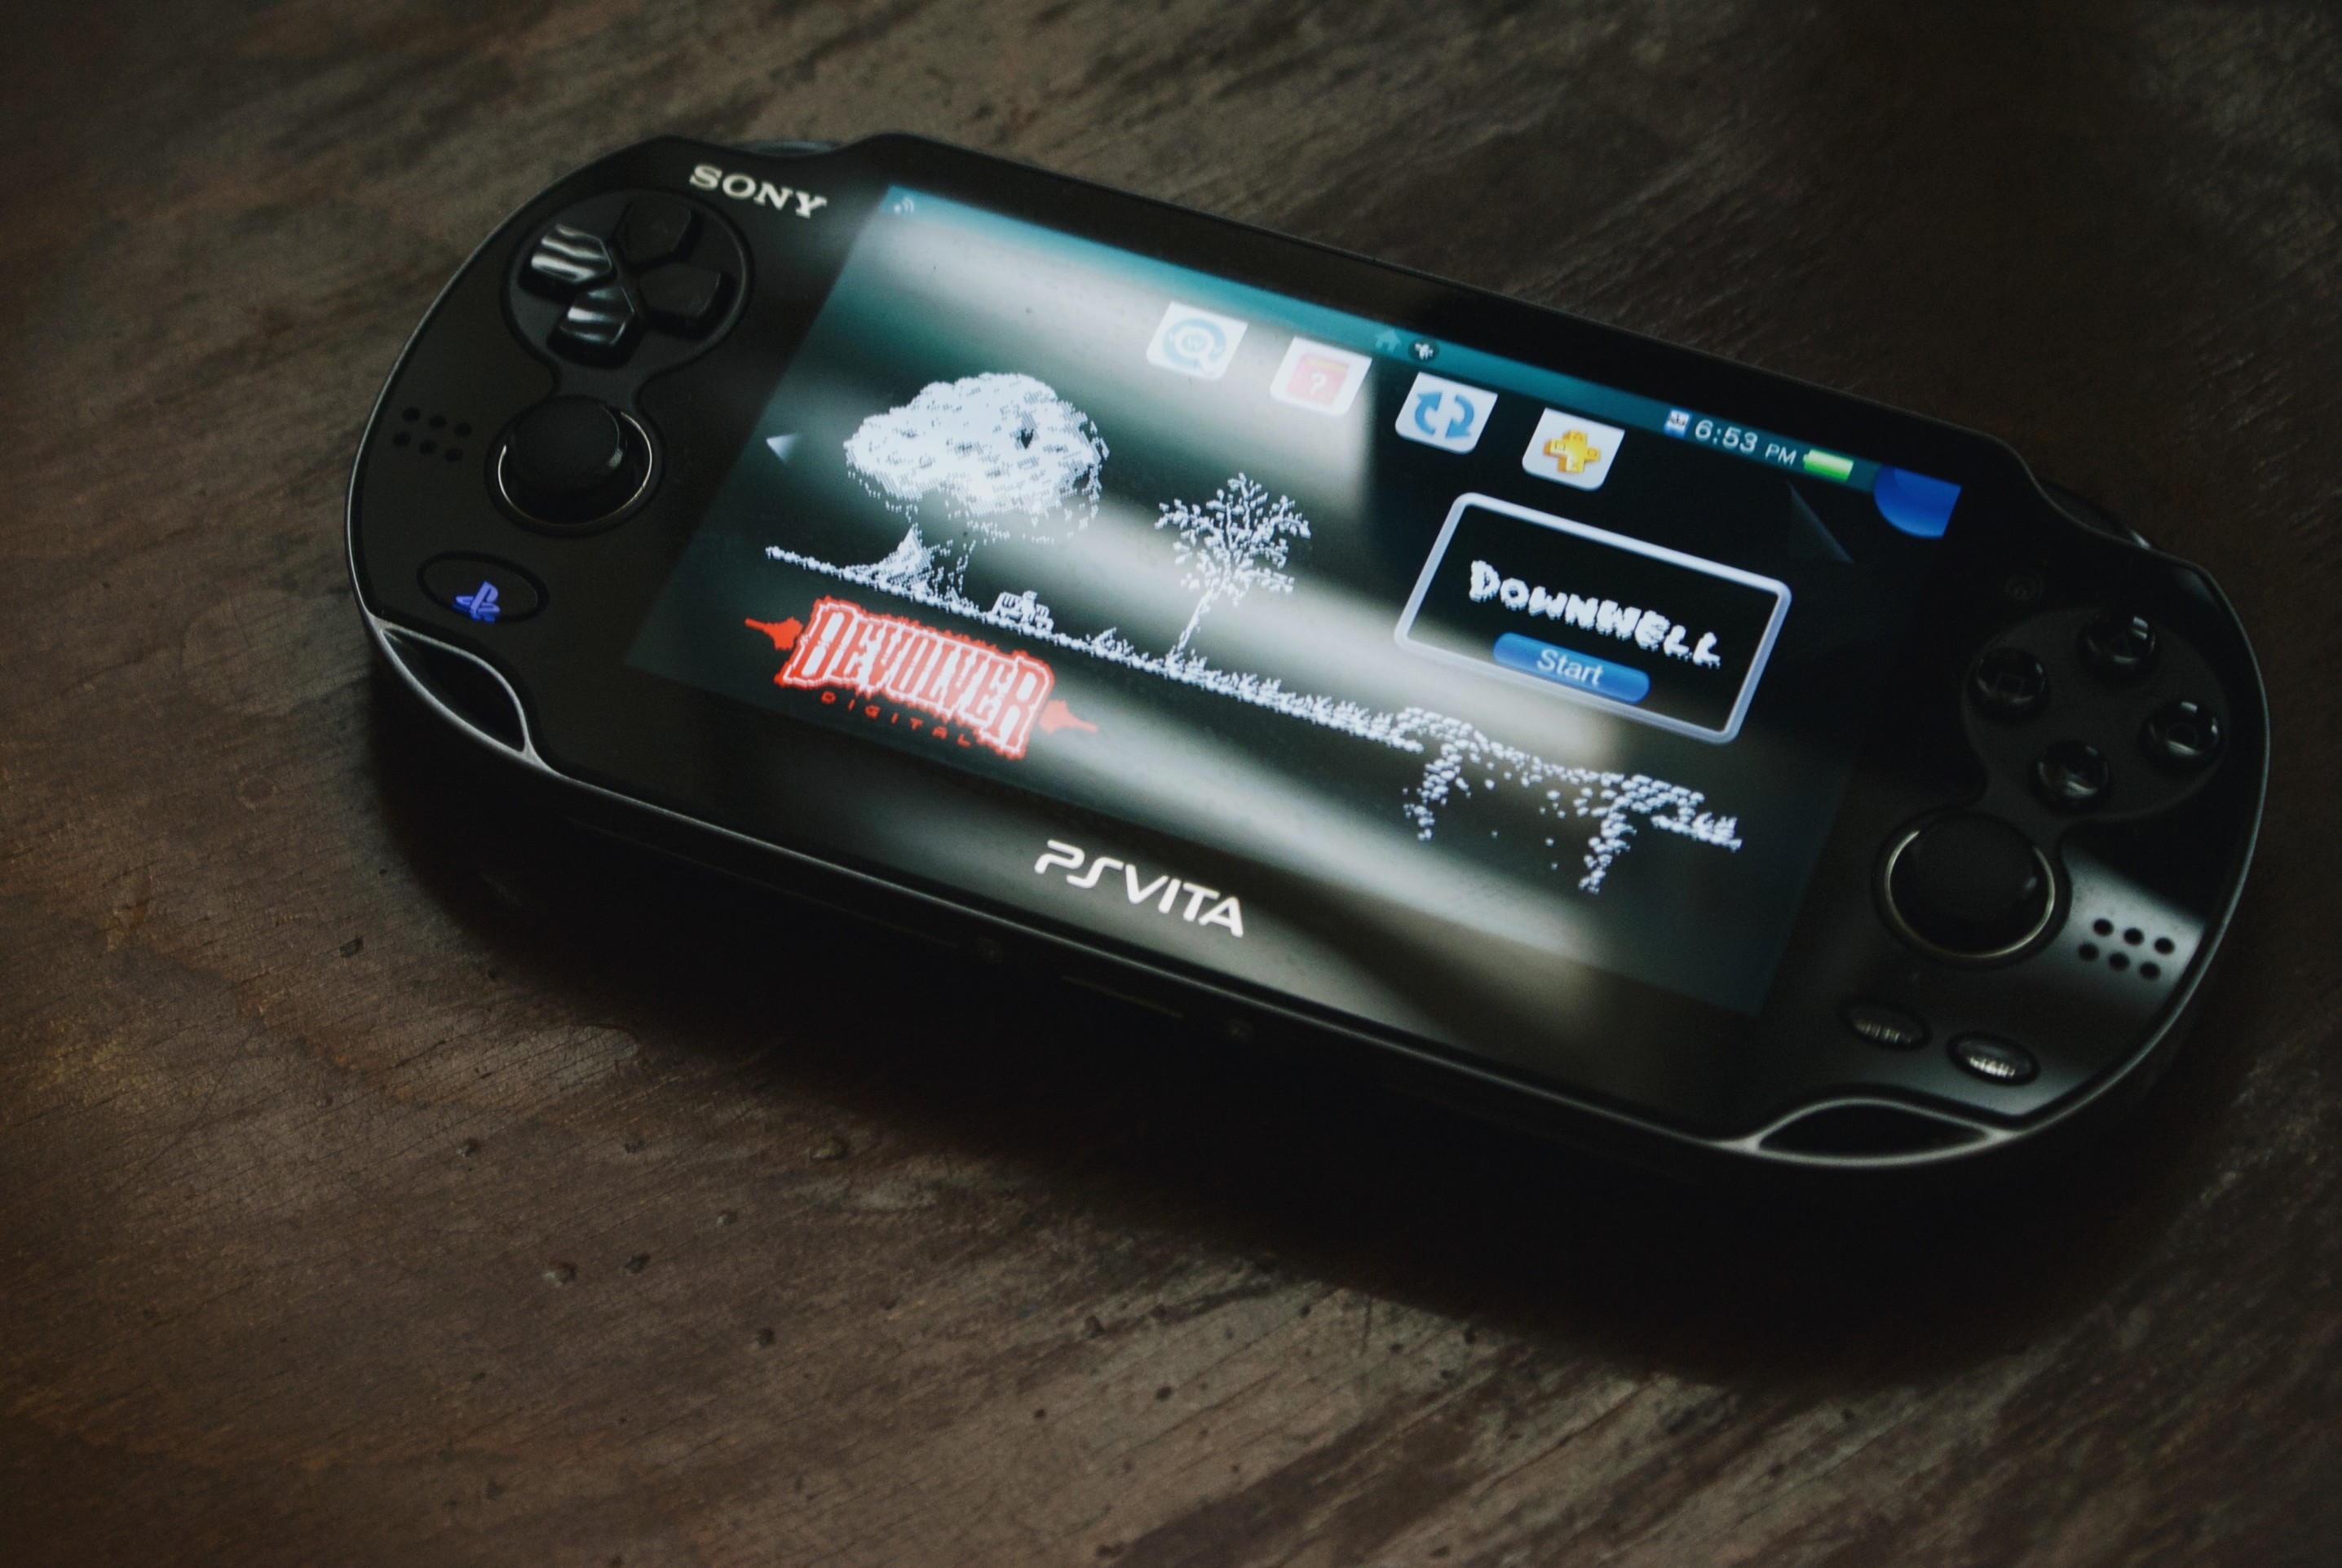 Gta 6 Ps Vita Date De Sortie La PS Vita est morte, les ambitions de Sony sur consoles portables aussi